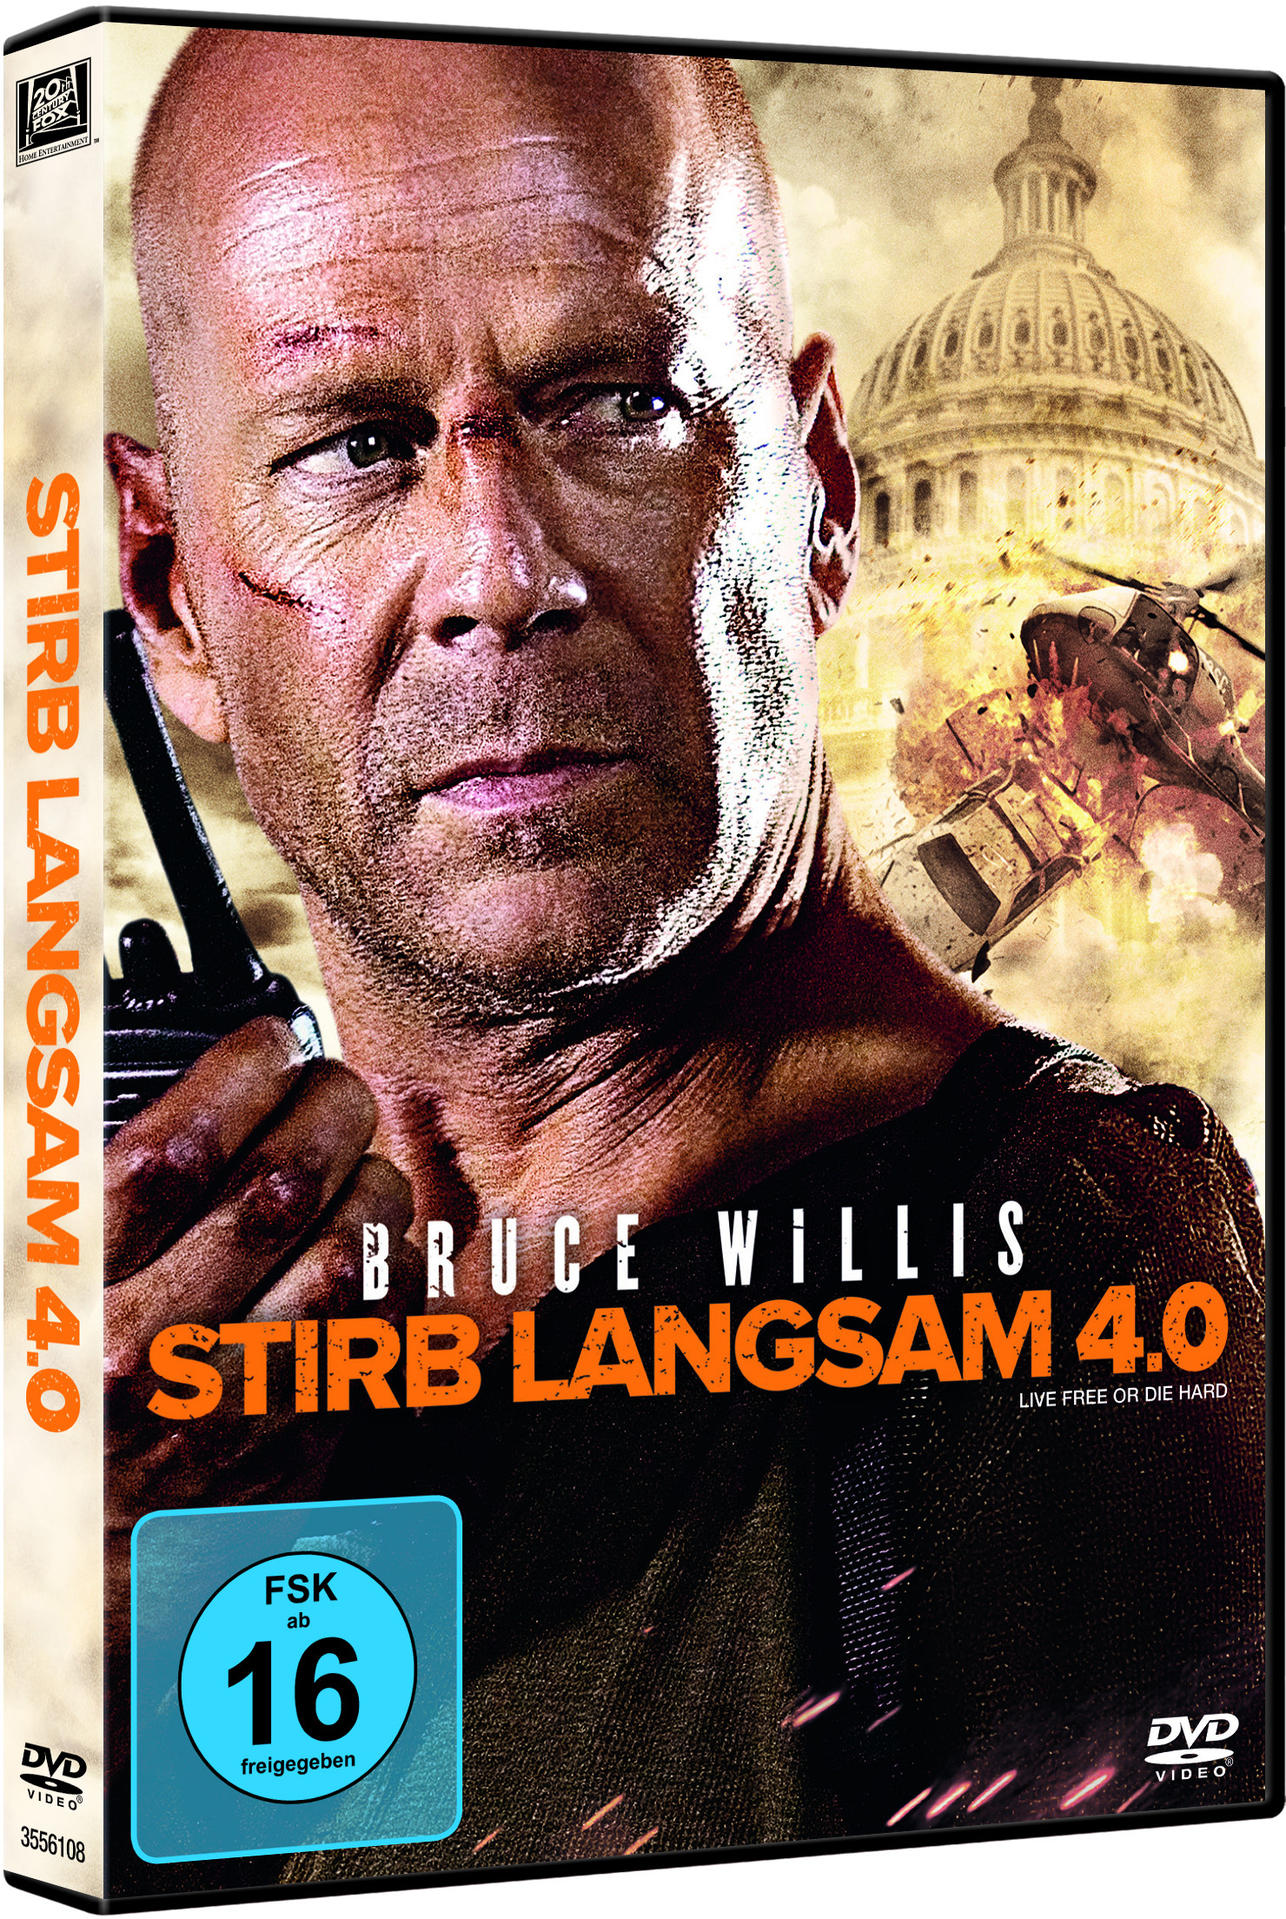 Stirb Langsam 4.0 DVD